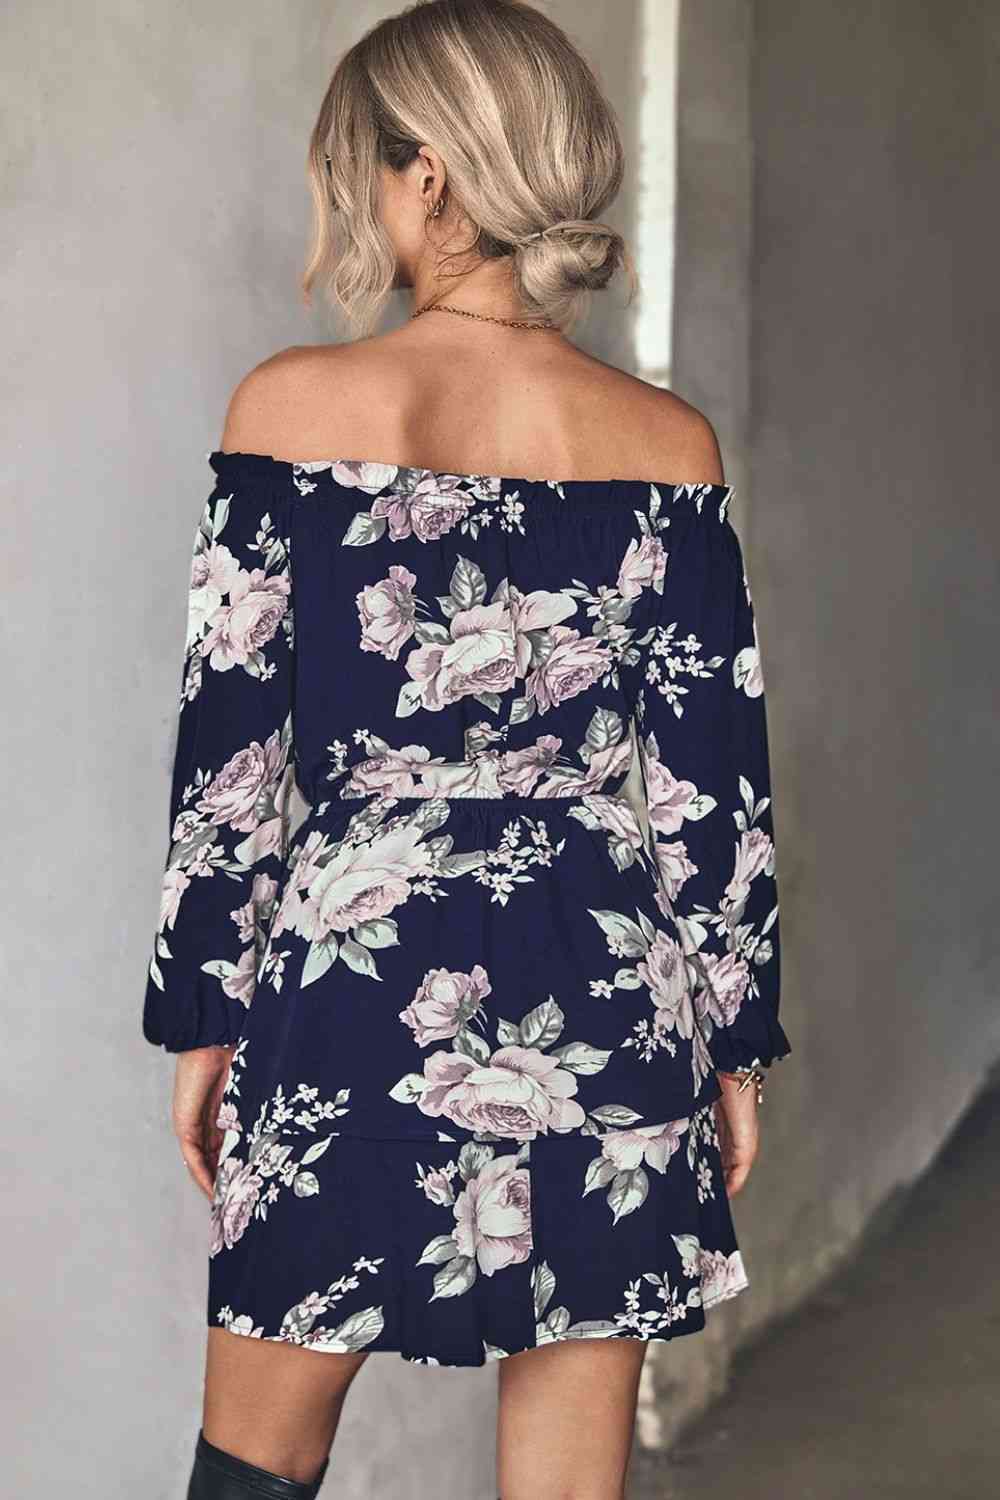 TEEK - Floral Off-Shoulder Layered Dress DRESS TEEK Trend   